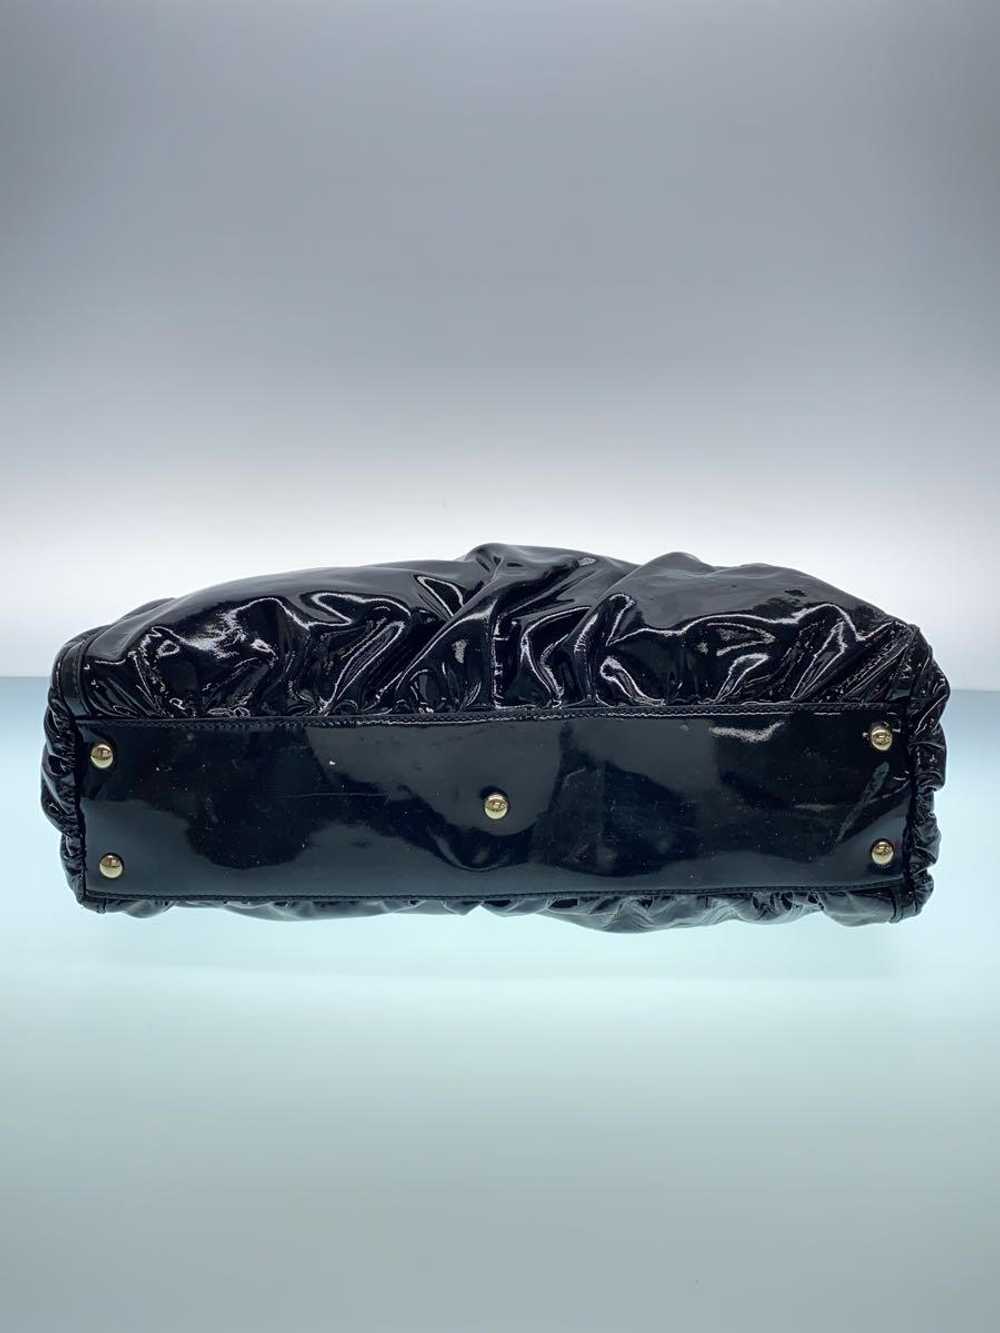 [Japan Used Bag] Used Gucci Bag/--/Blk/190248 Bag - image 4